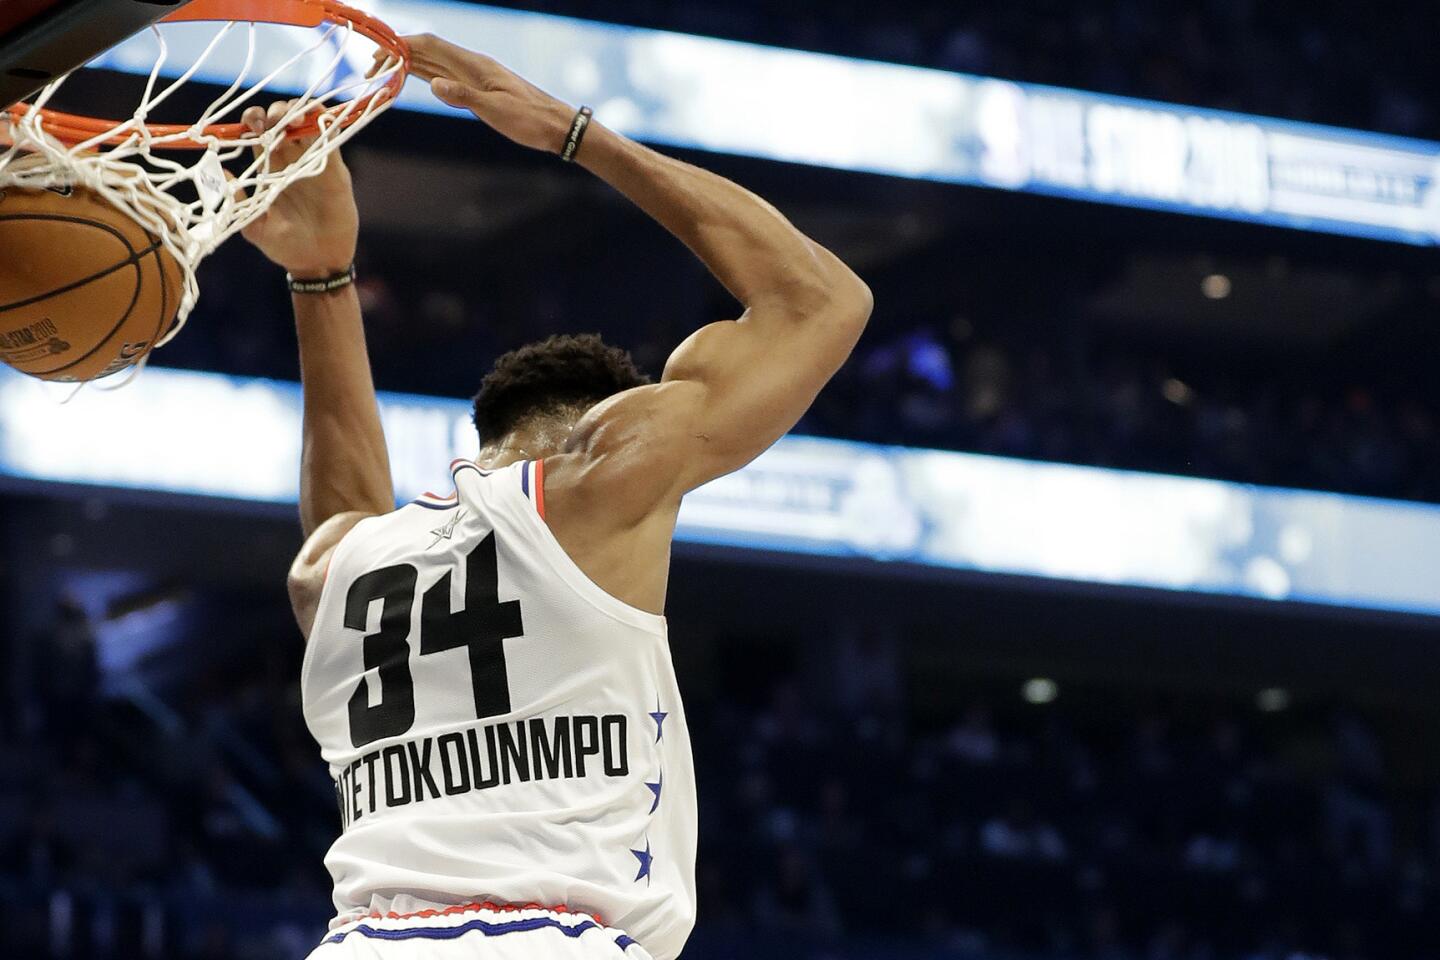 2019 NBA All-Star Game-Used Basketball (4th Quarter)